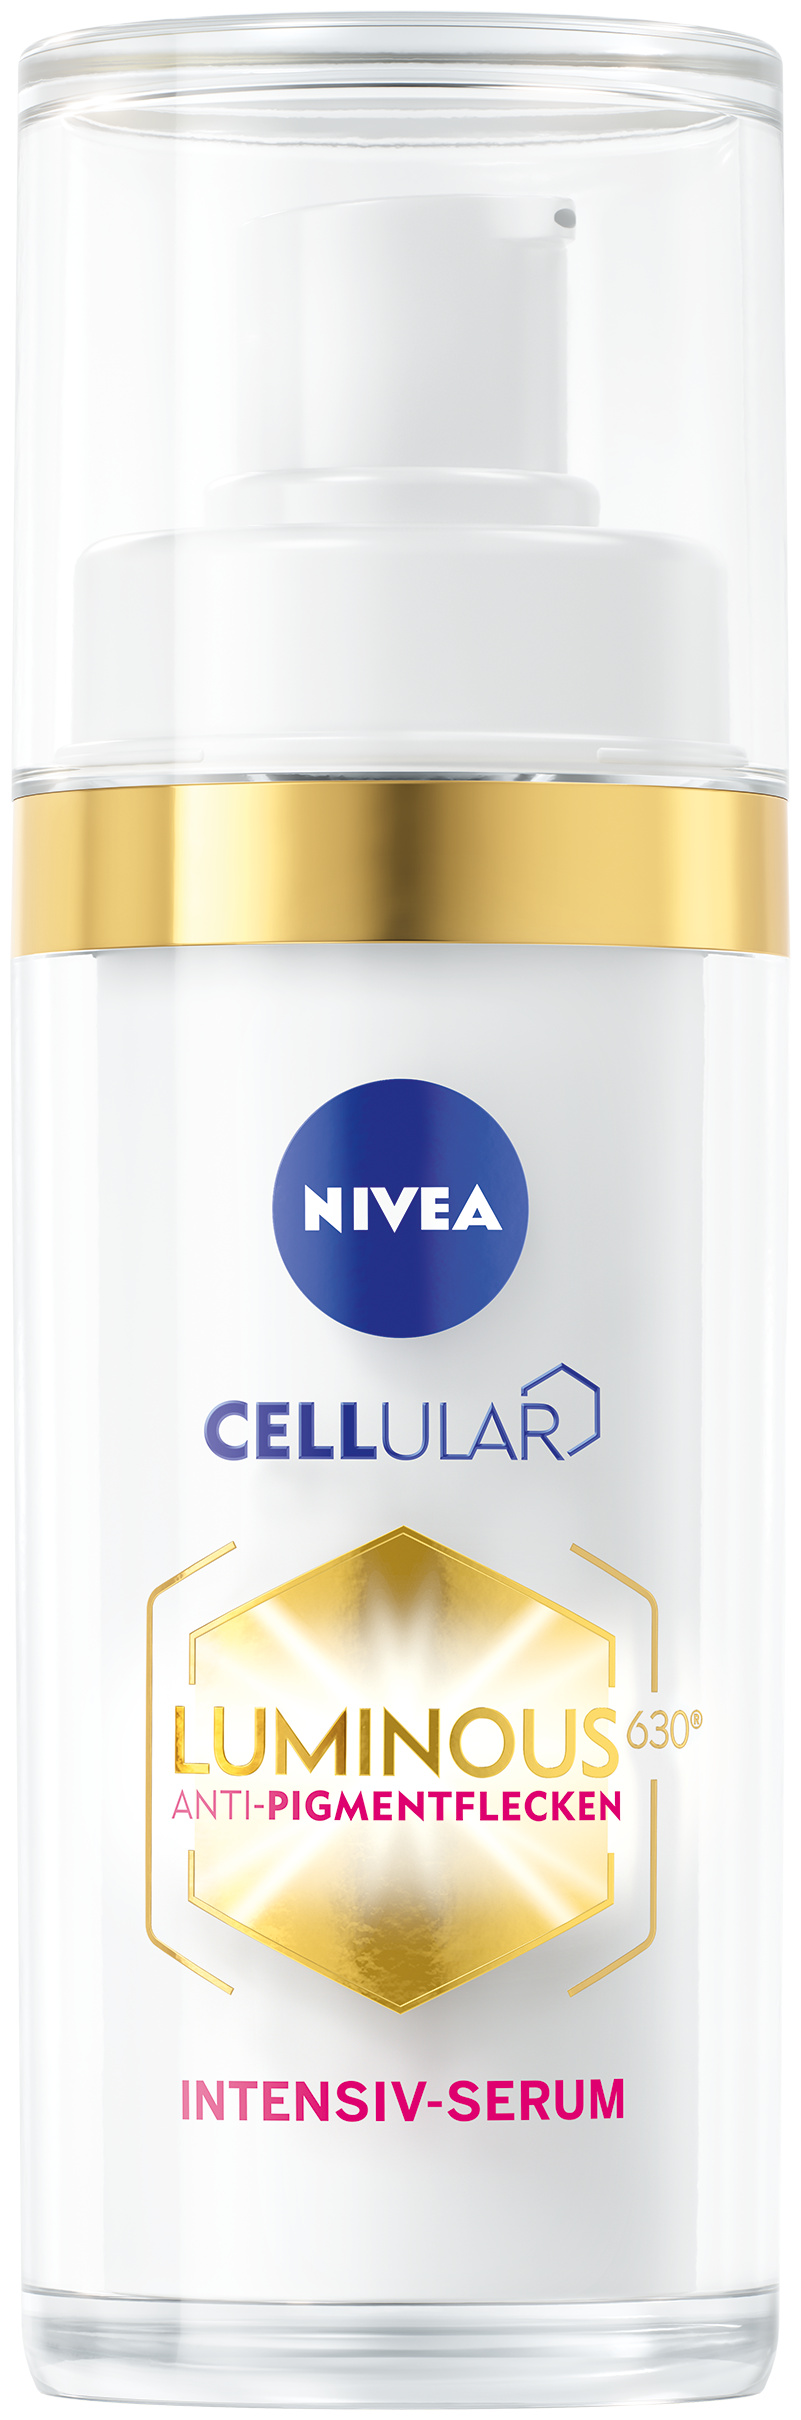 NIVEA Cellular Luminous630 AntiPigmentflecken Serum 30ml EUR 29,99